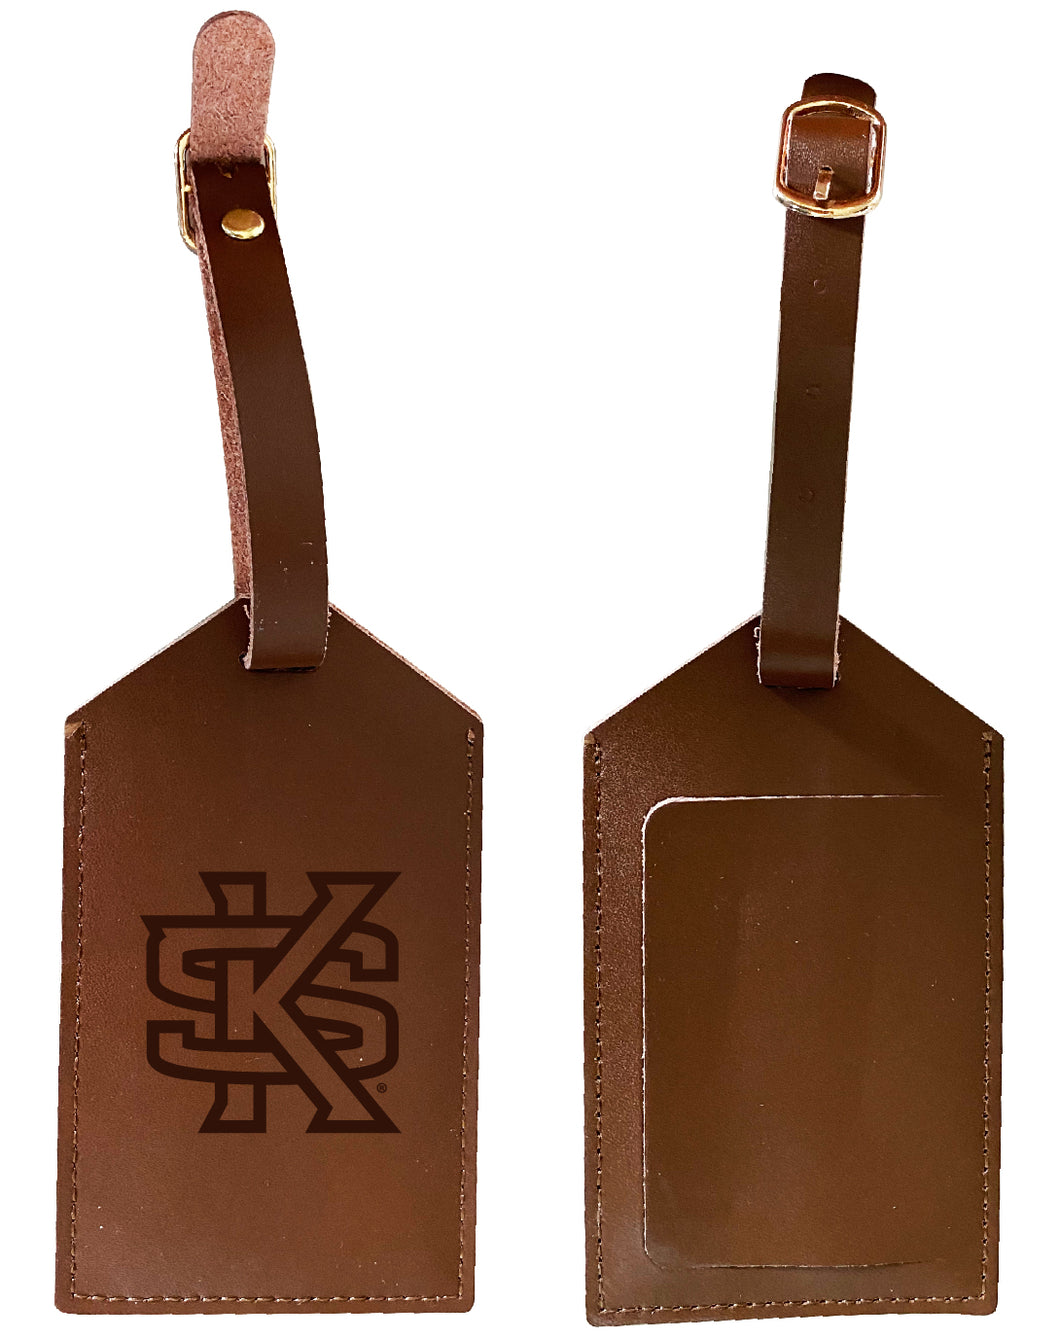 Elegant Kennesaw State University NCAA Leather Luggage Tag with Engraved Logo